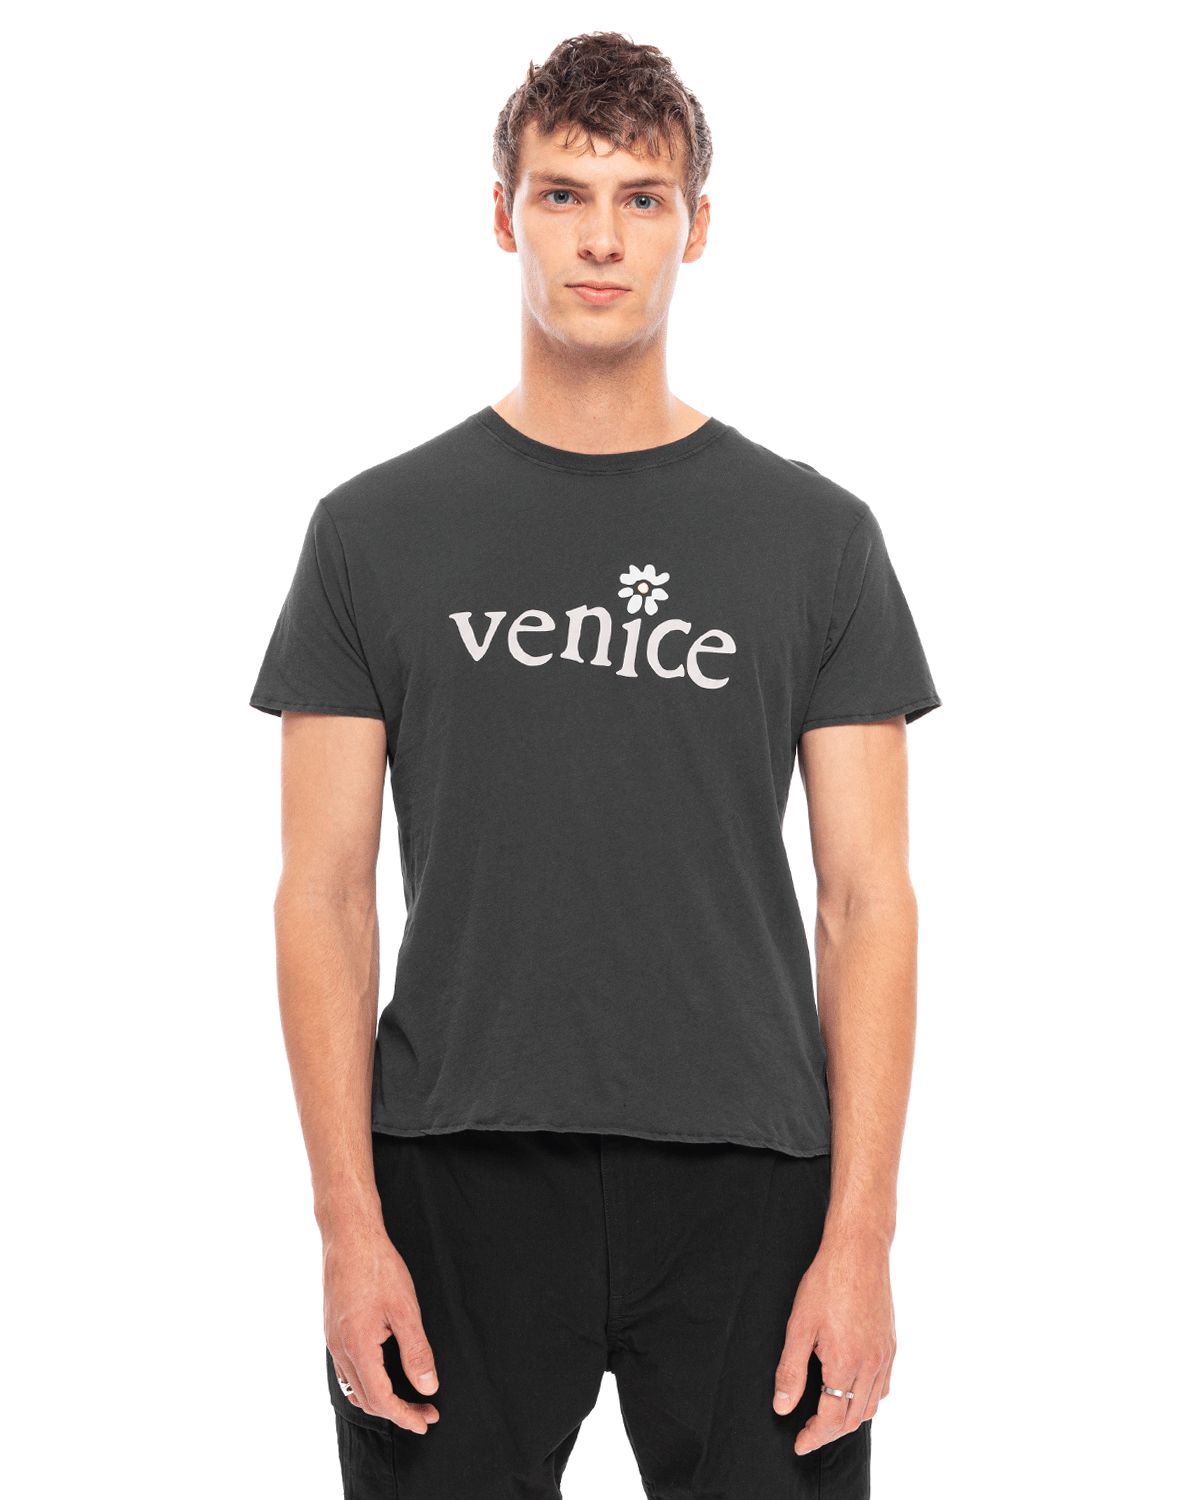 Venice Print T-Shirt Jersey Black